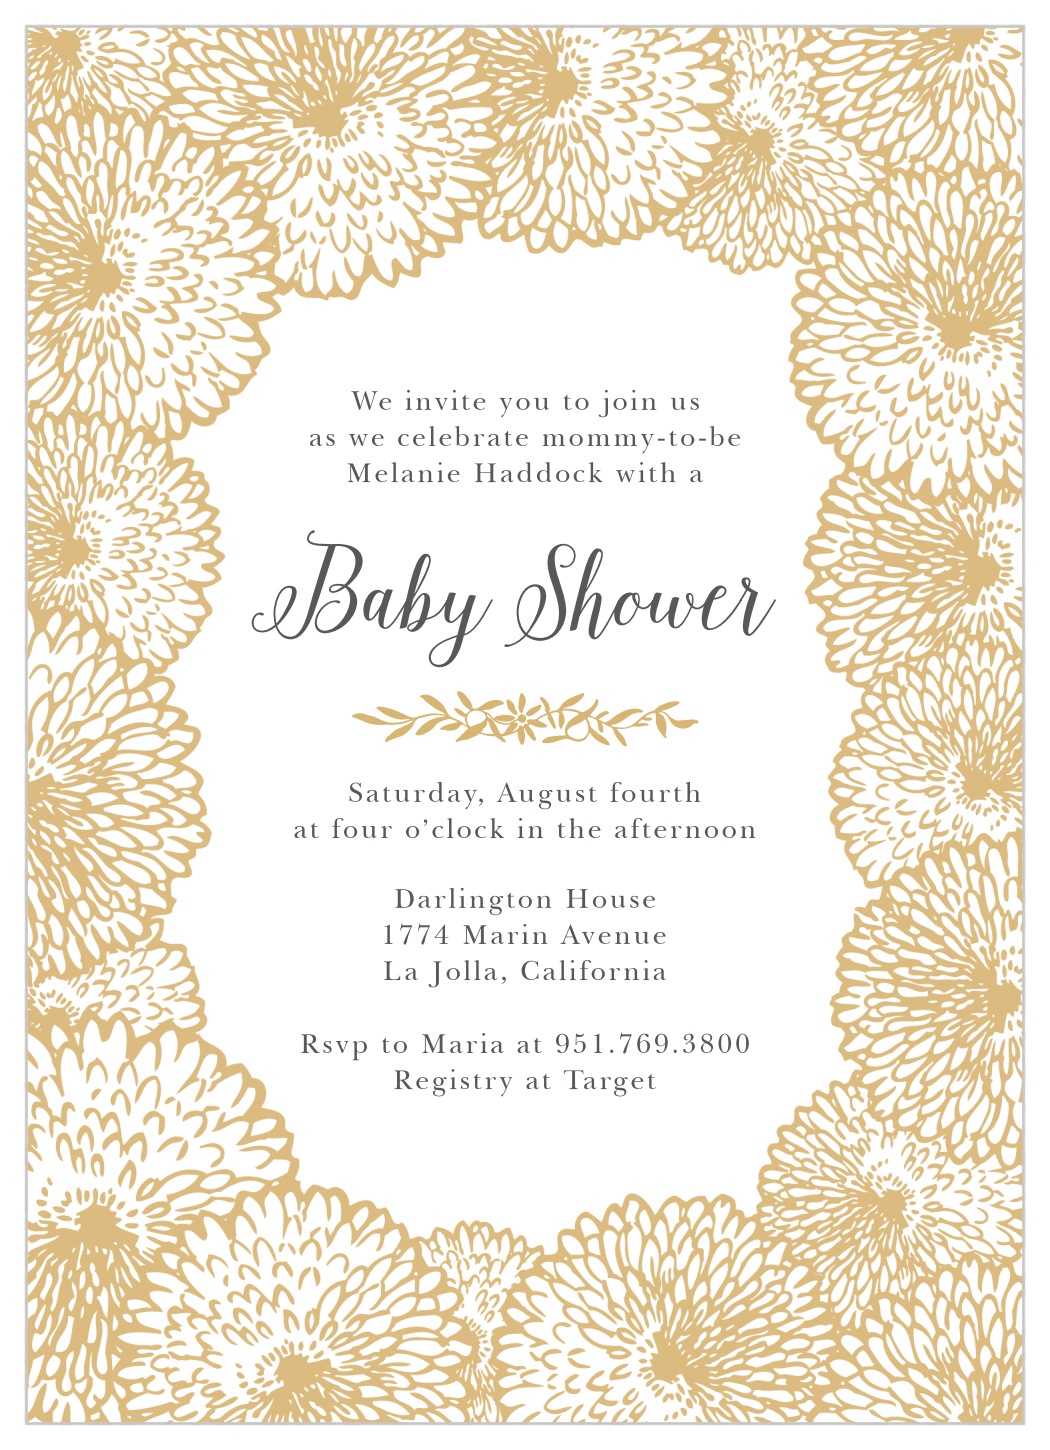 Dandelion Patch Baby Shower Invitations